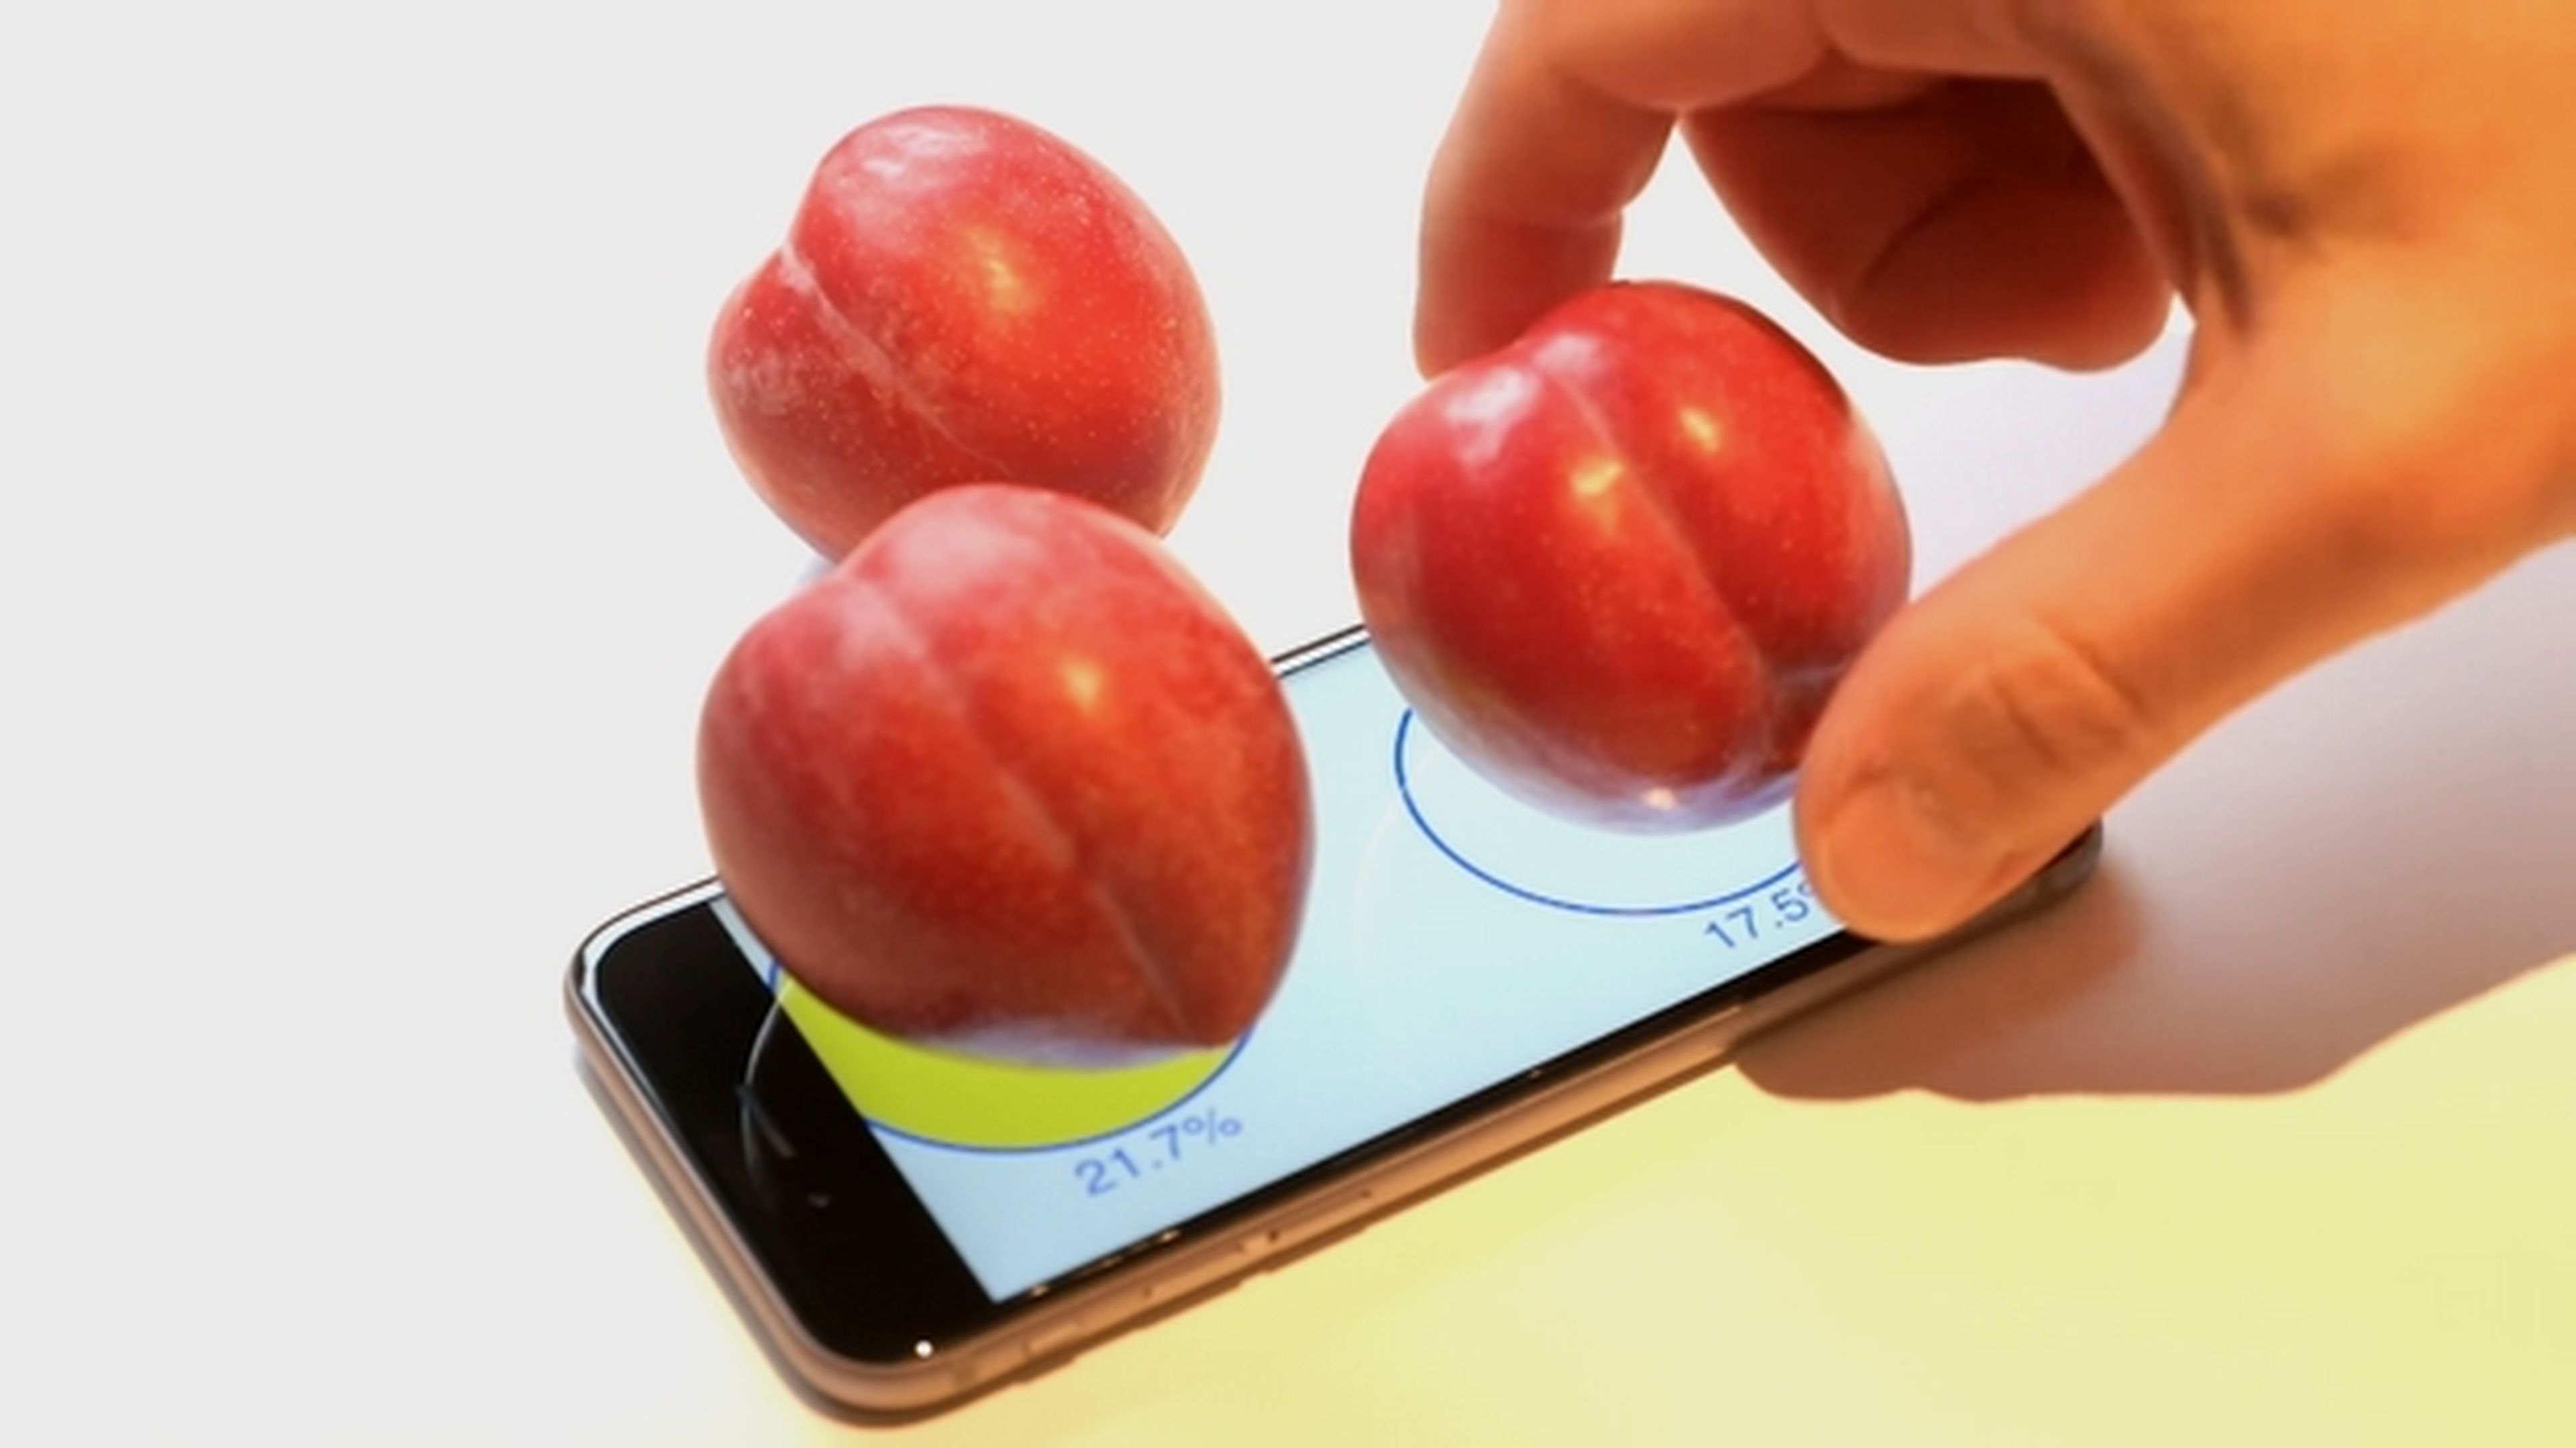 Usan la pantalla 3D Touch del iPhone 6s como báscula para pesar ciruelas.